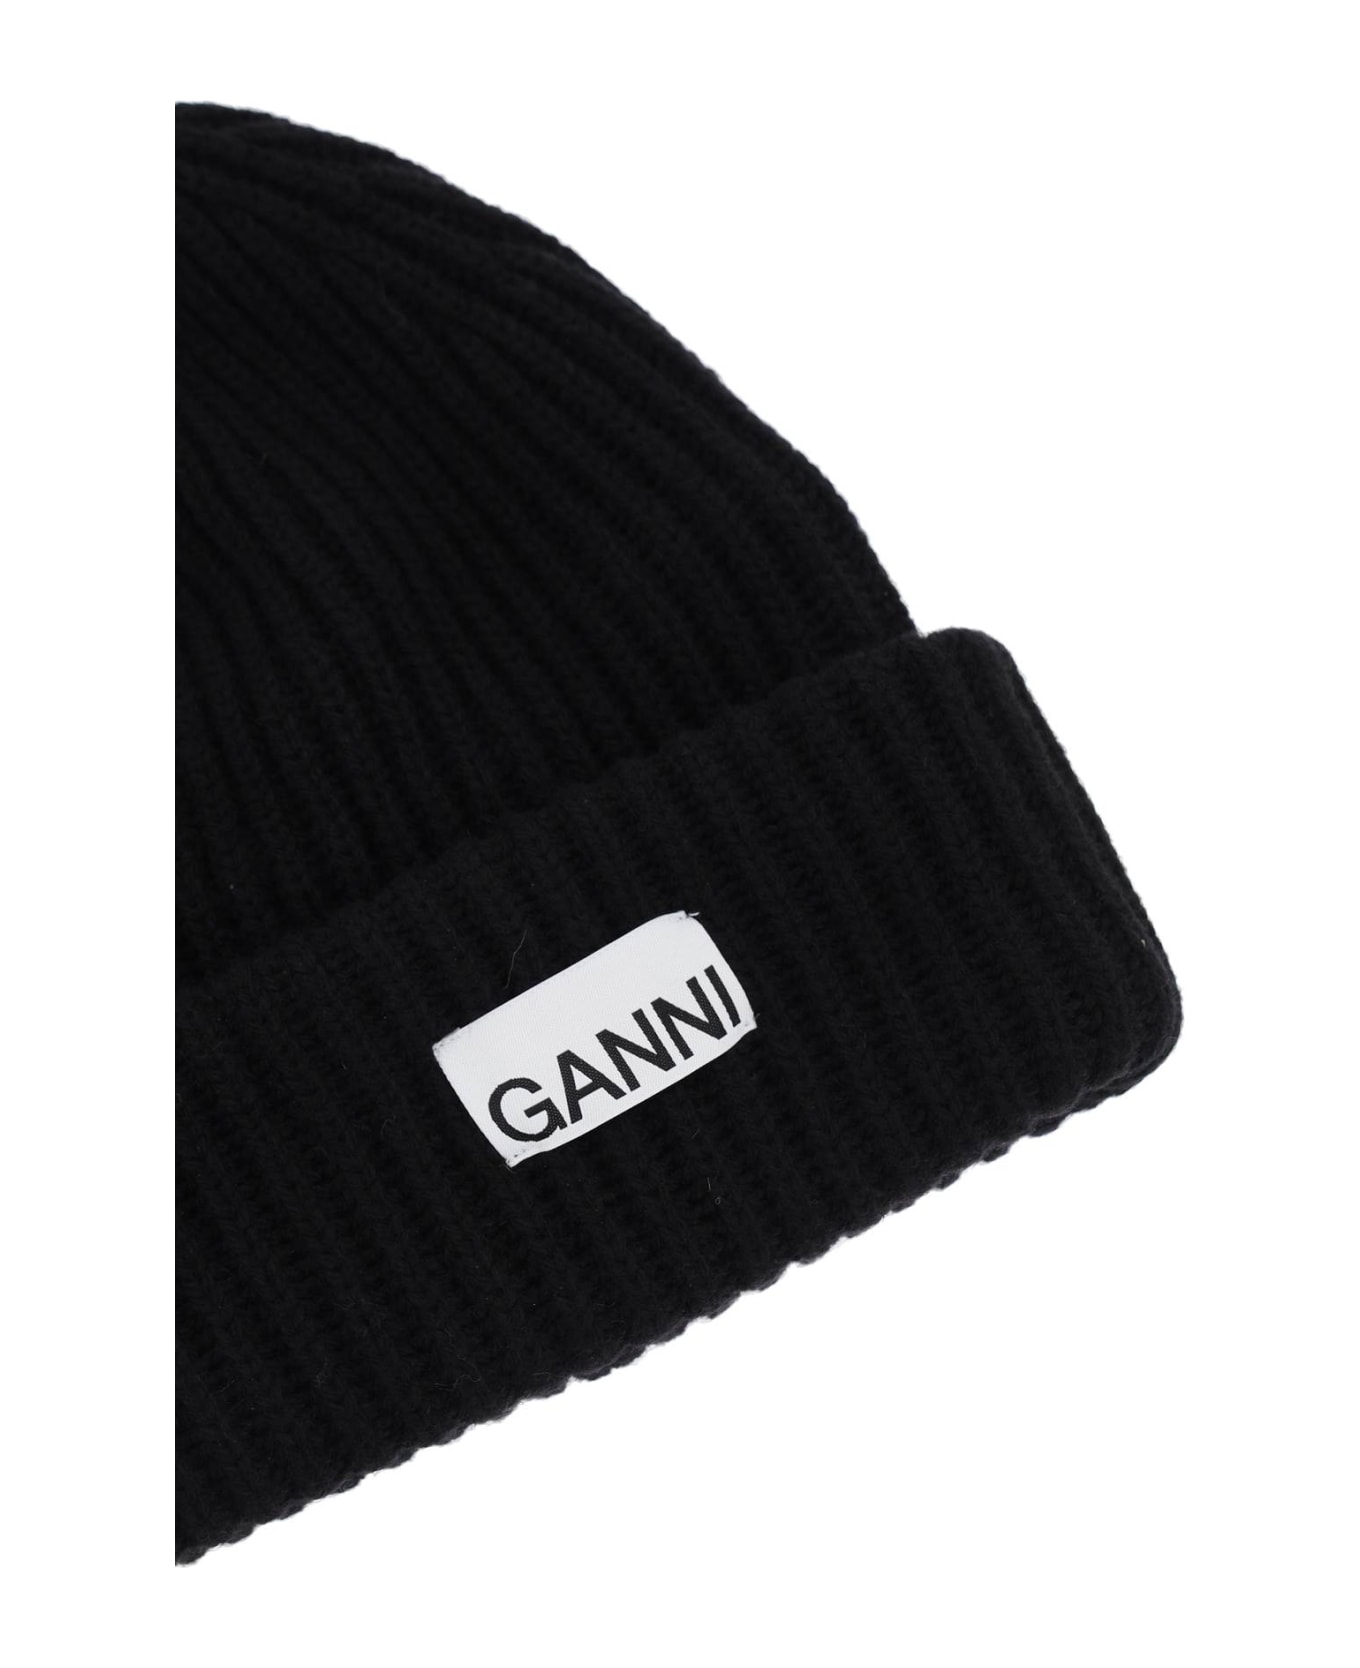 Ganni Beanie Hat - Black